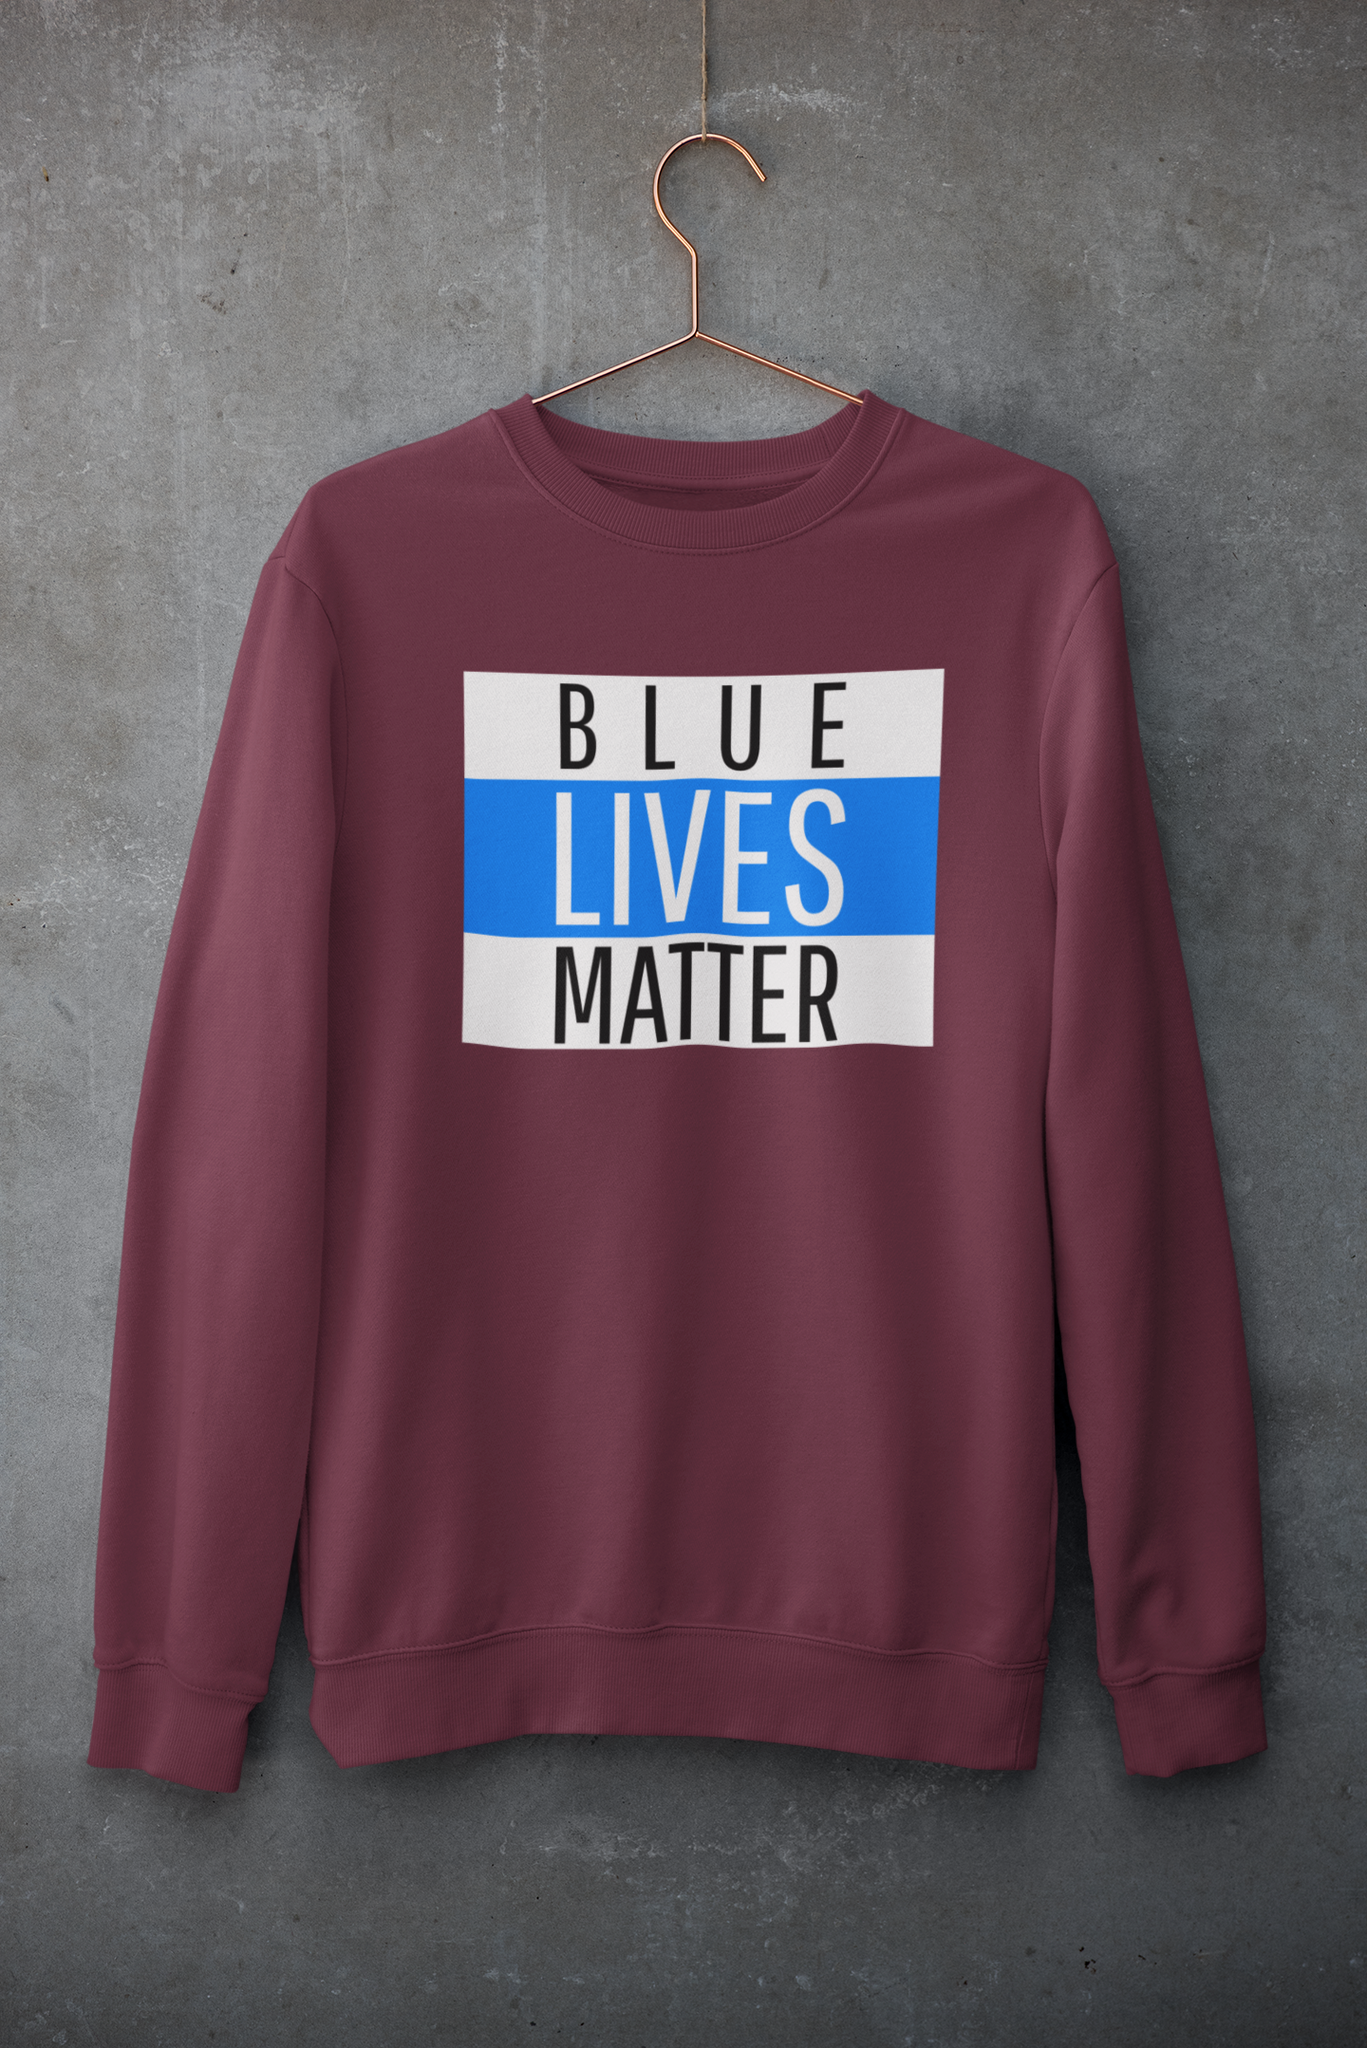 Blue Lives Matter Sweatshirt Unisex